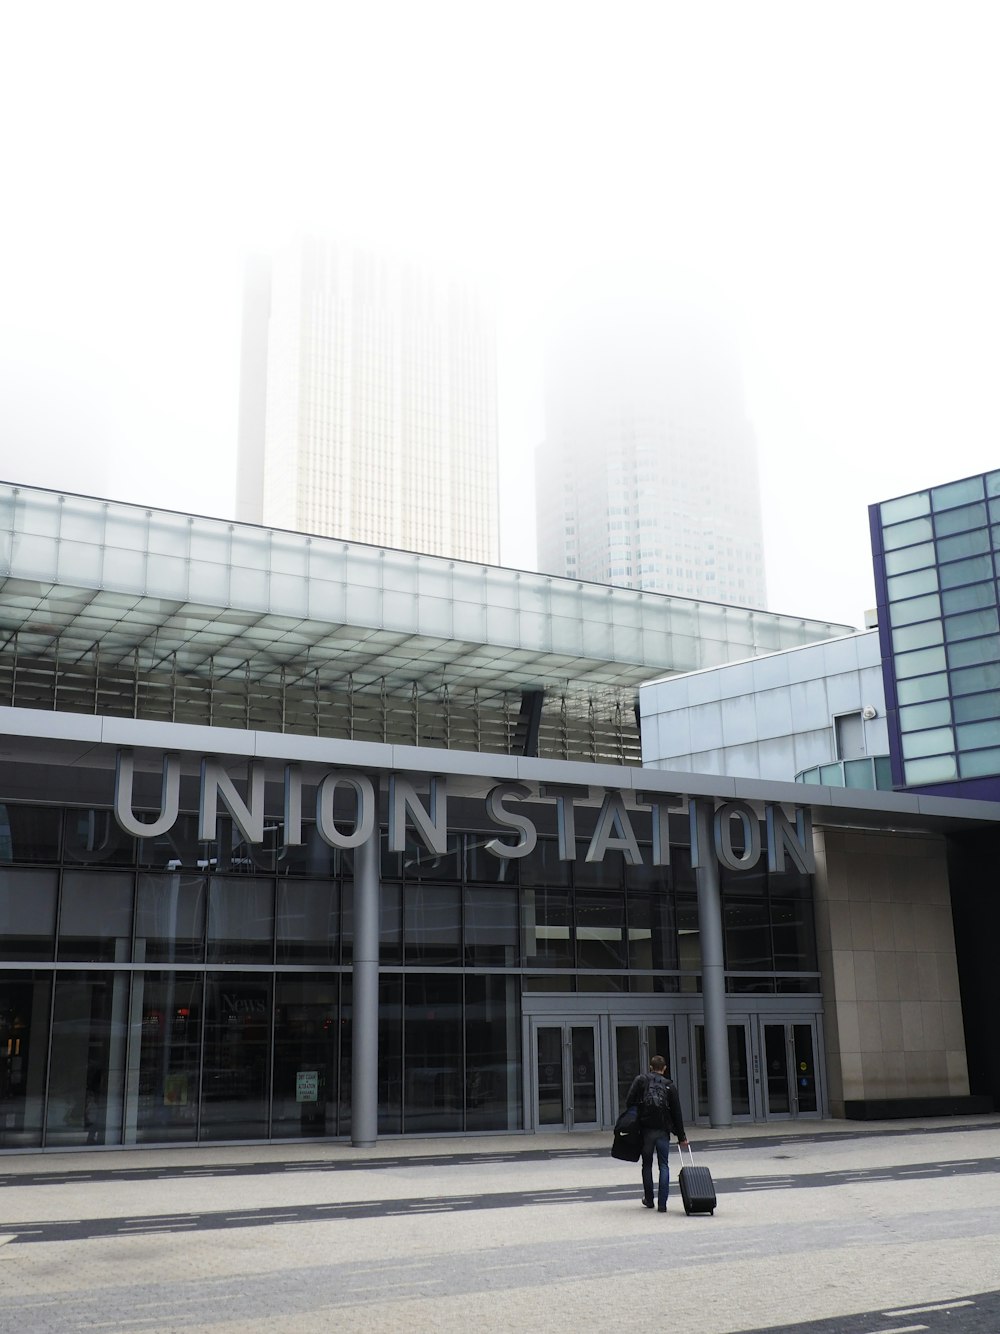 Union Station building